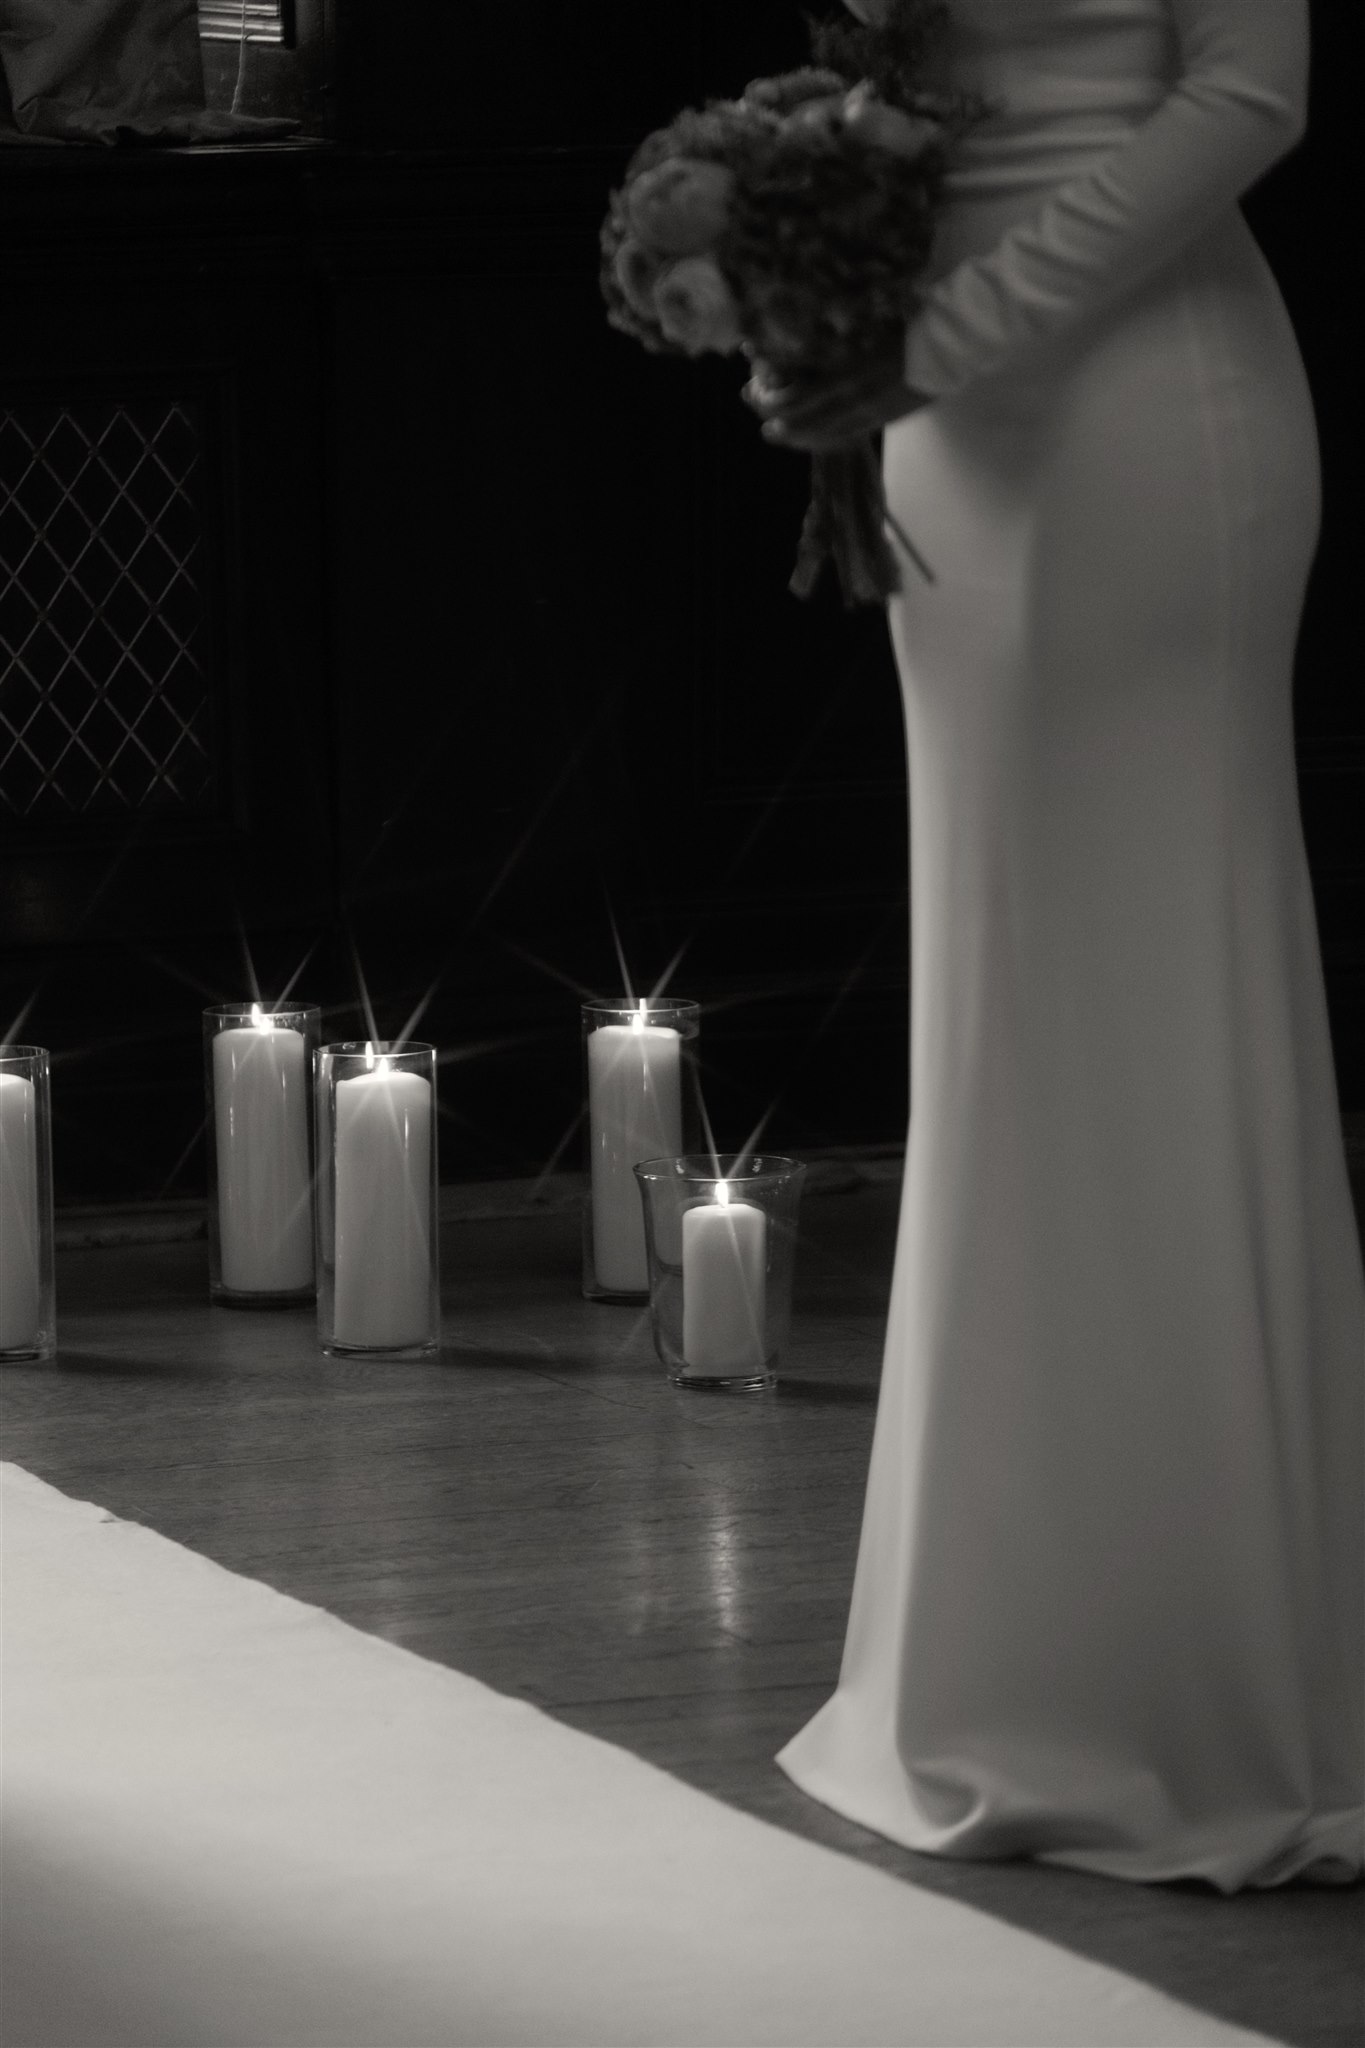 glasgow elopement photographer trades hall wedding candlit spring photography